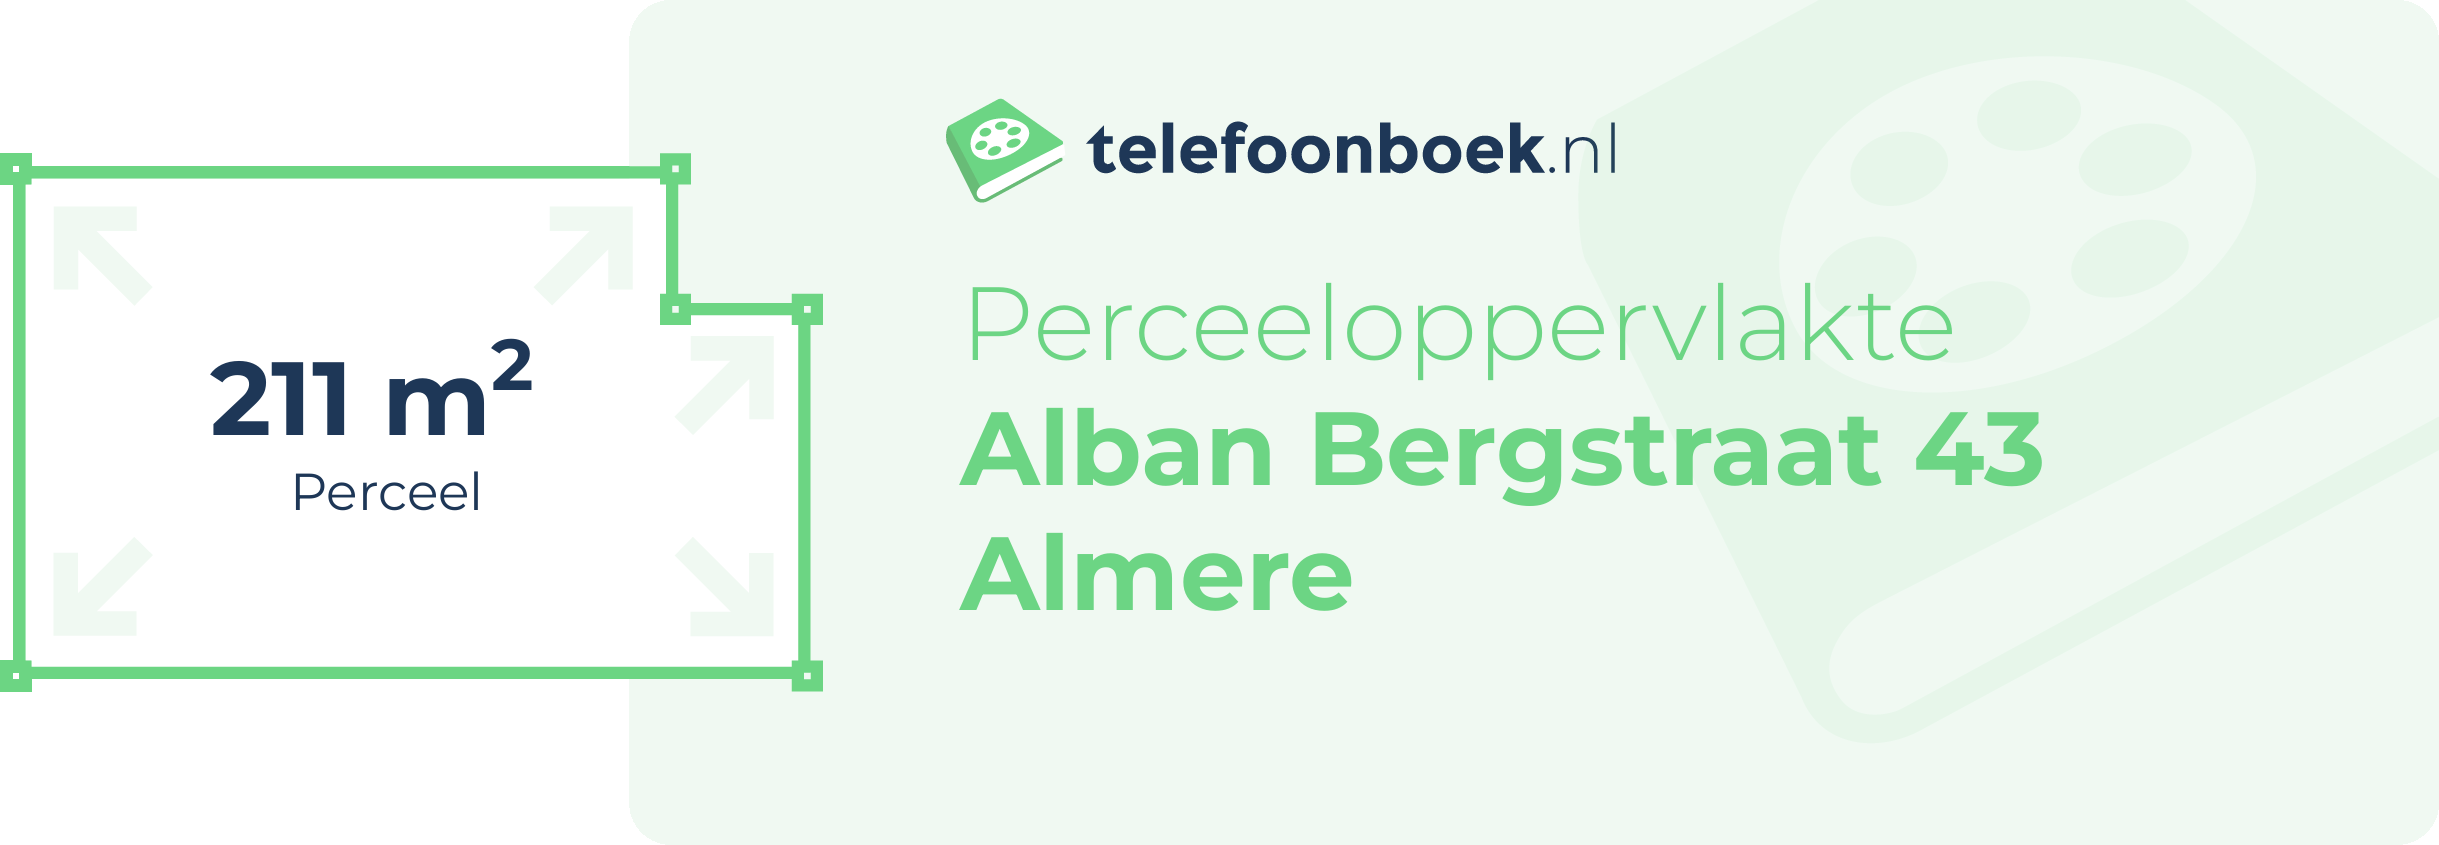 Perceeloppervlakte Alban Bergstraat 43 Almere